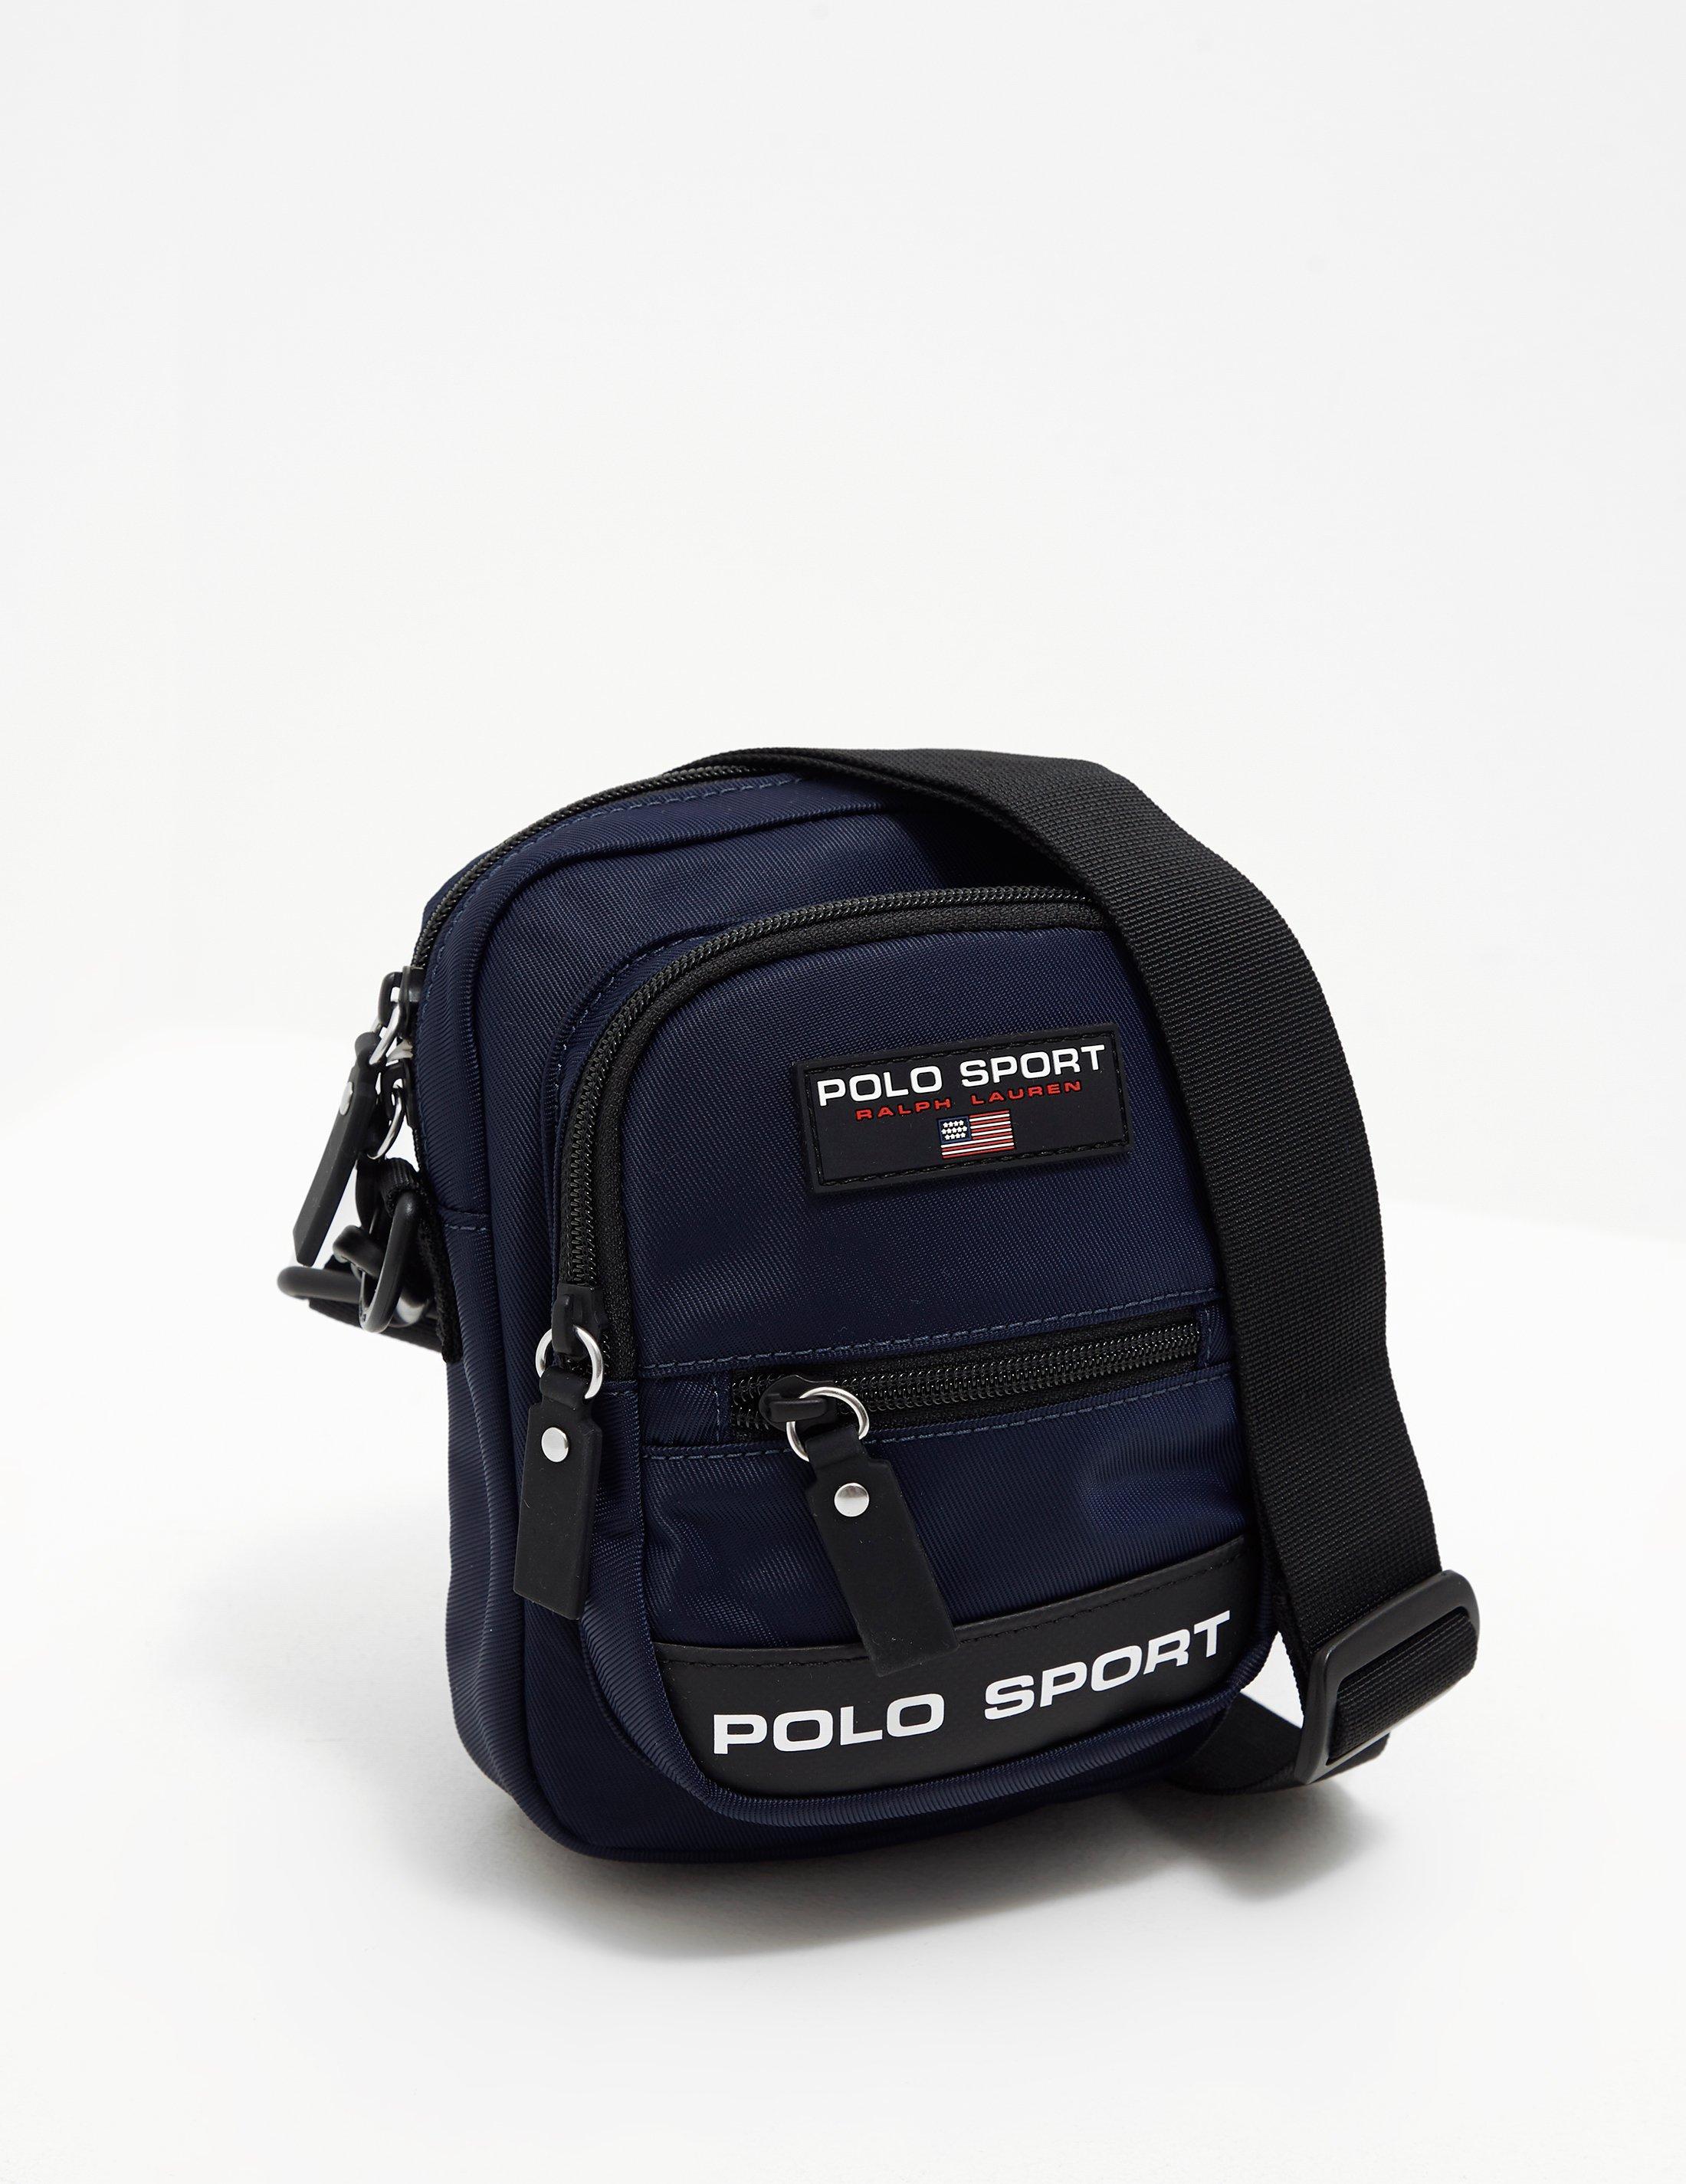 Polo Ralph Lauren Sport Small Item Bag Navy Blue for Men - Lyst